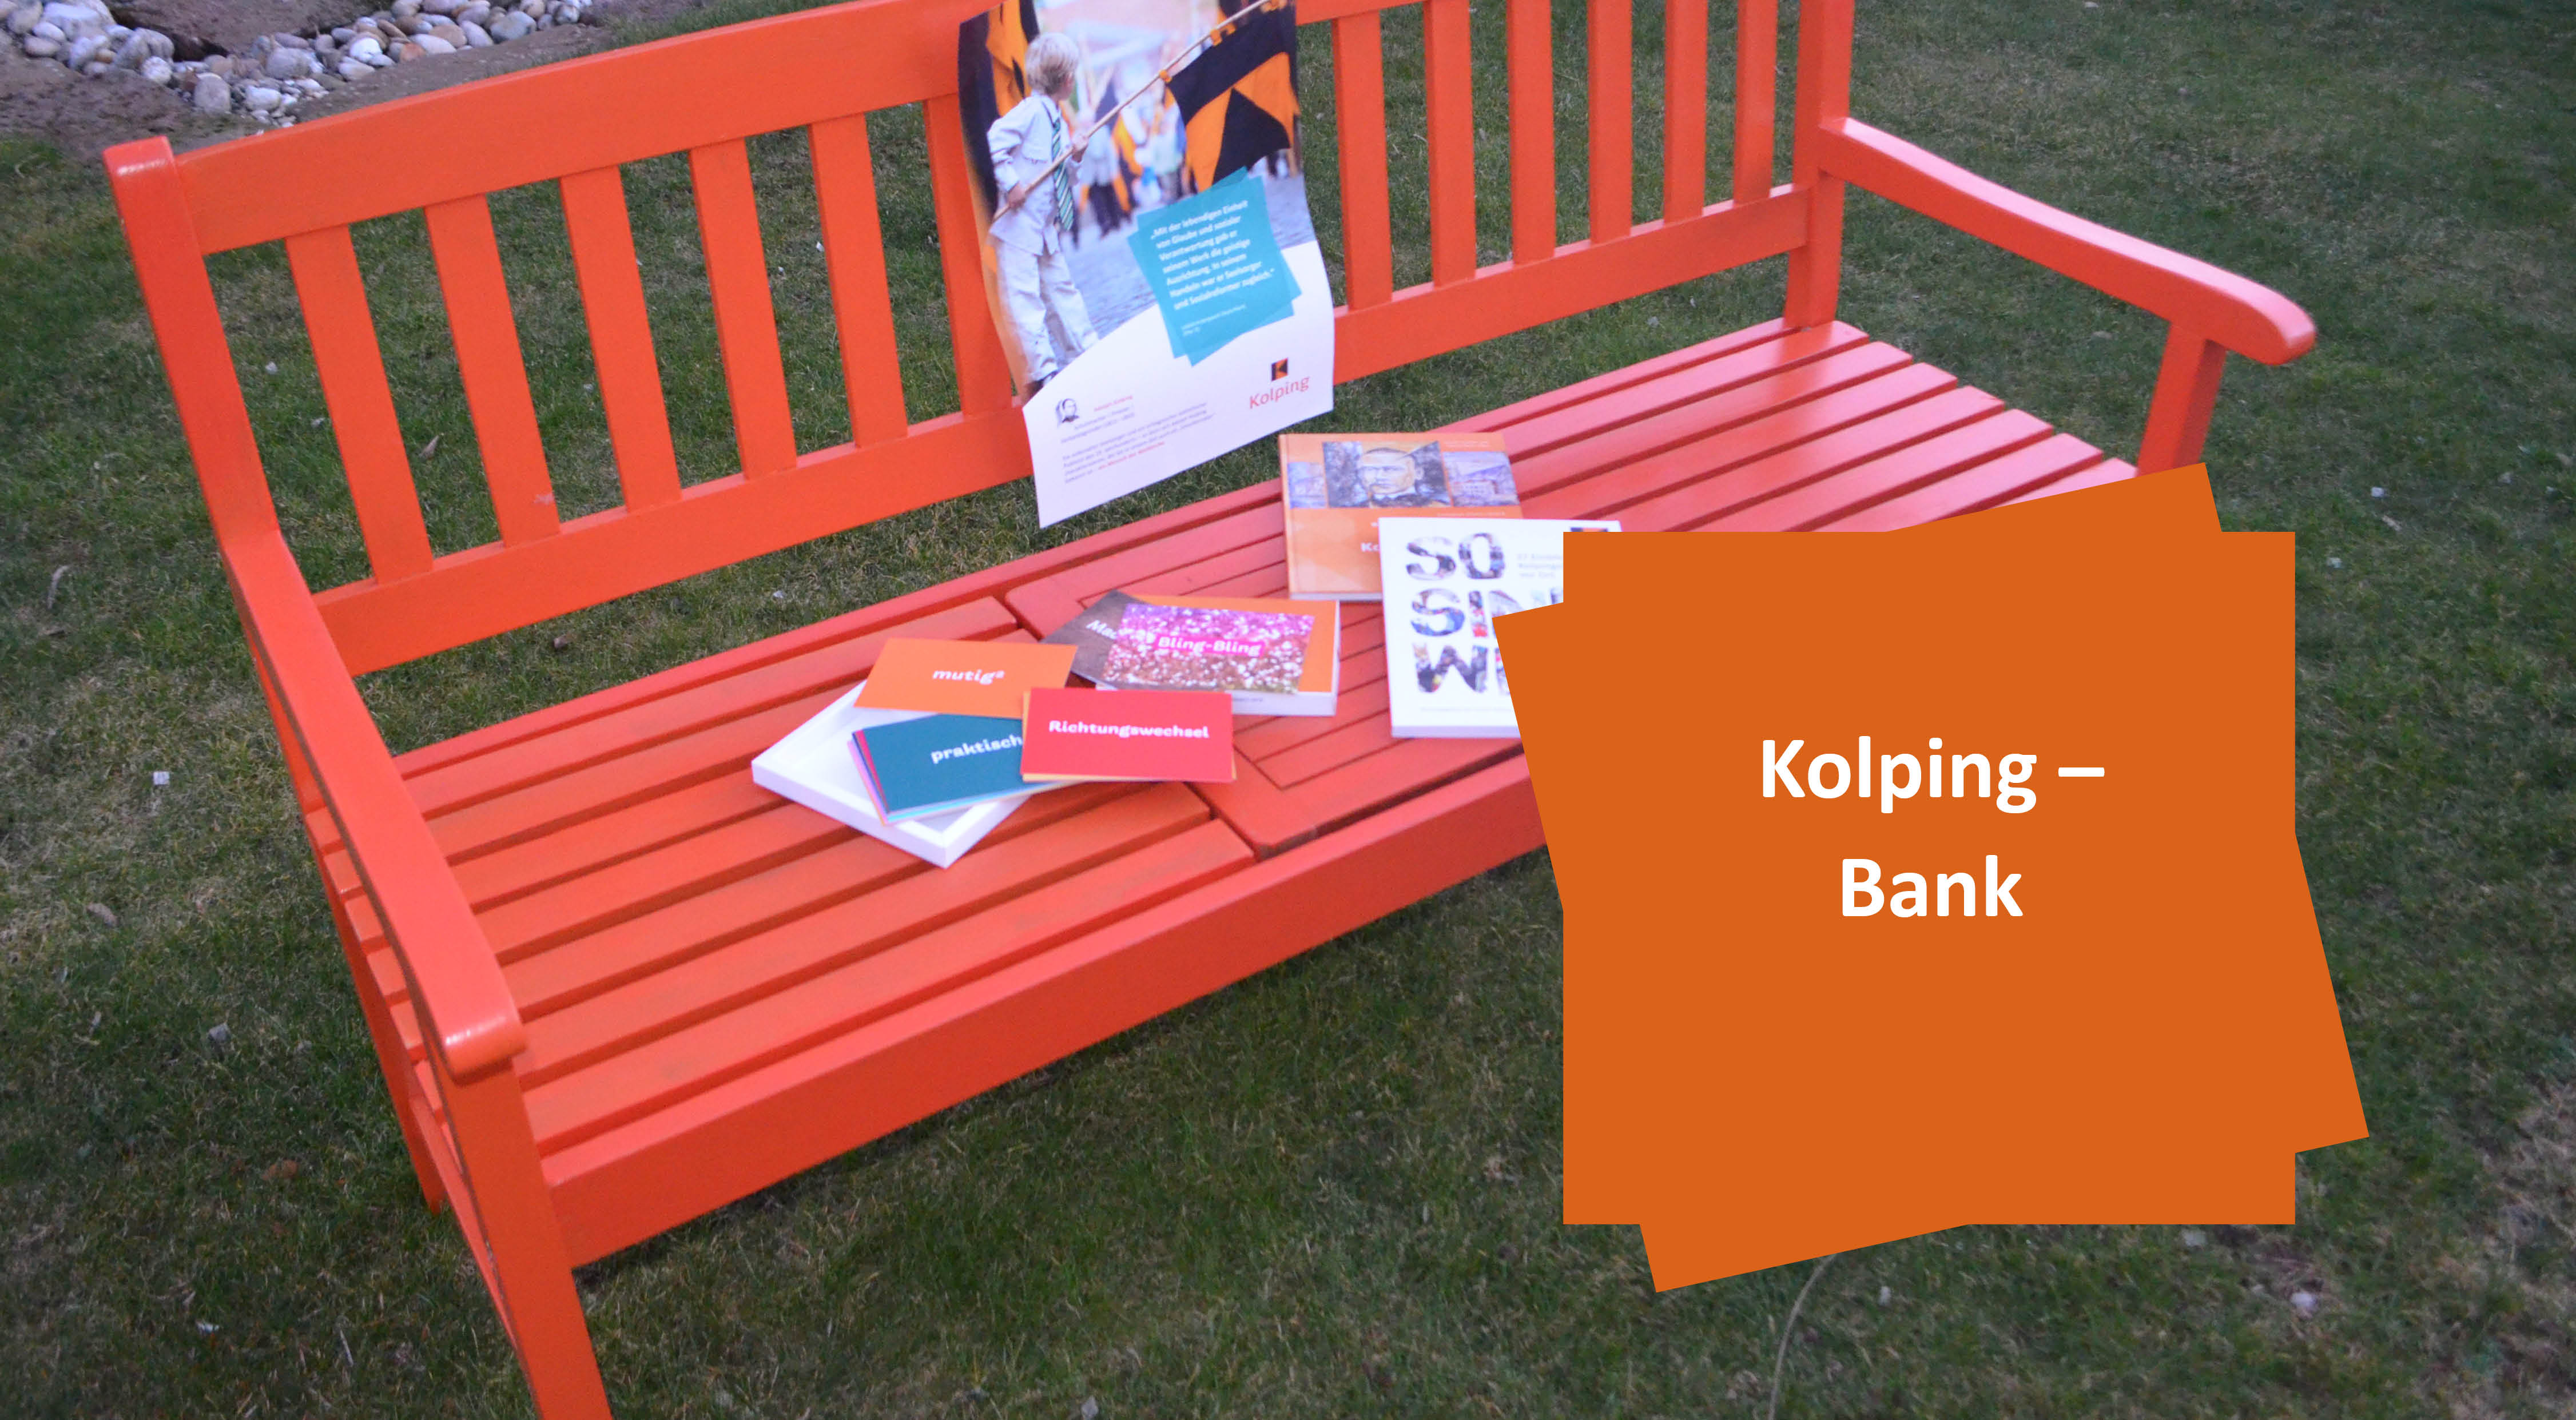 Kolpingbank